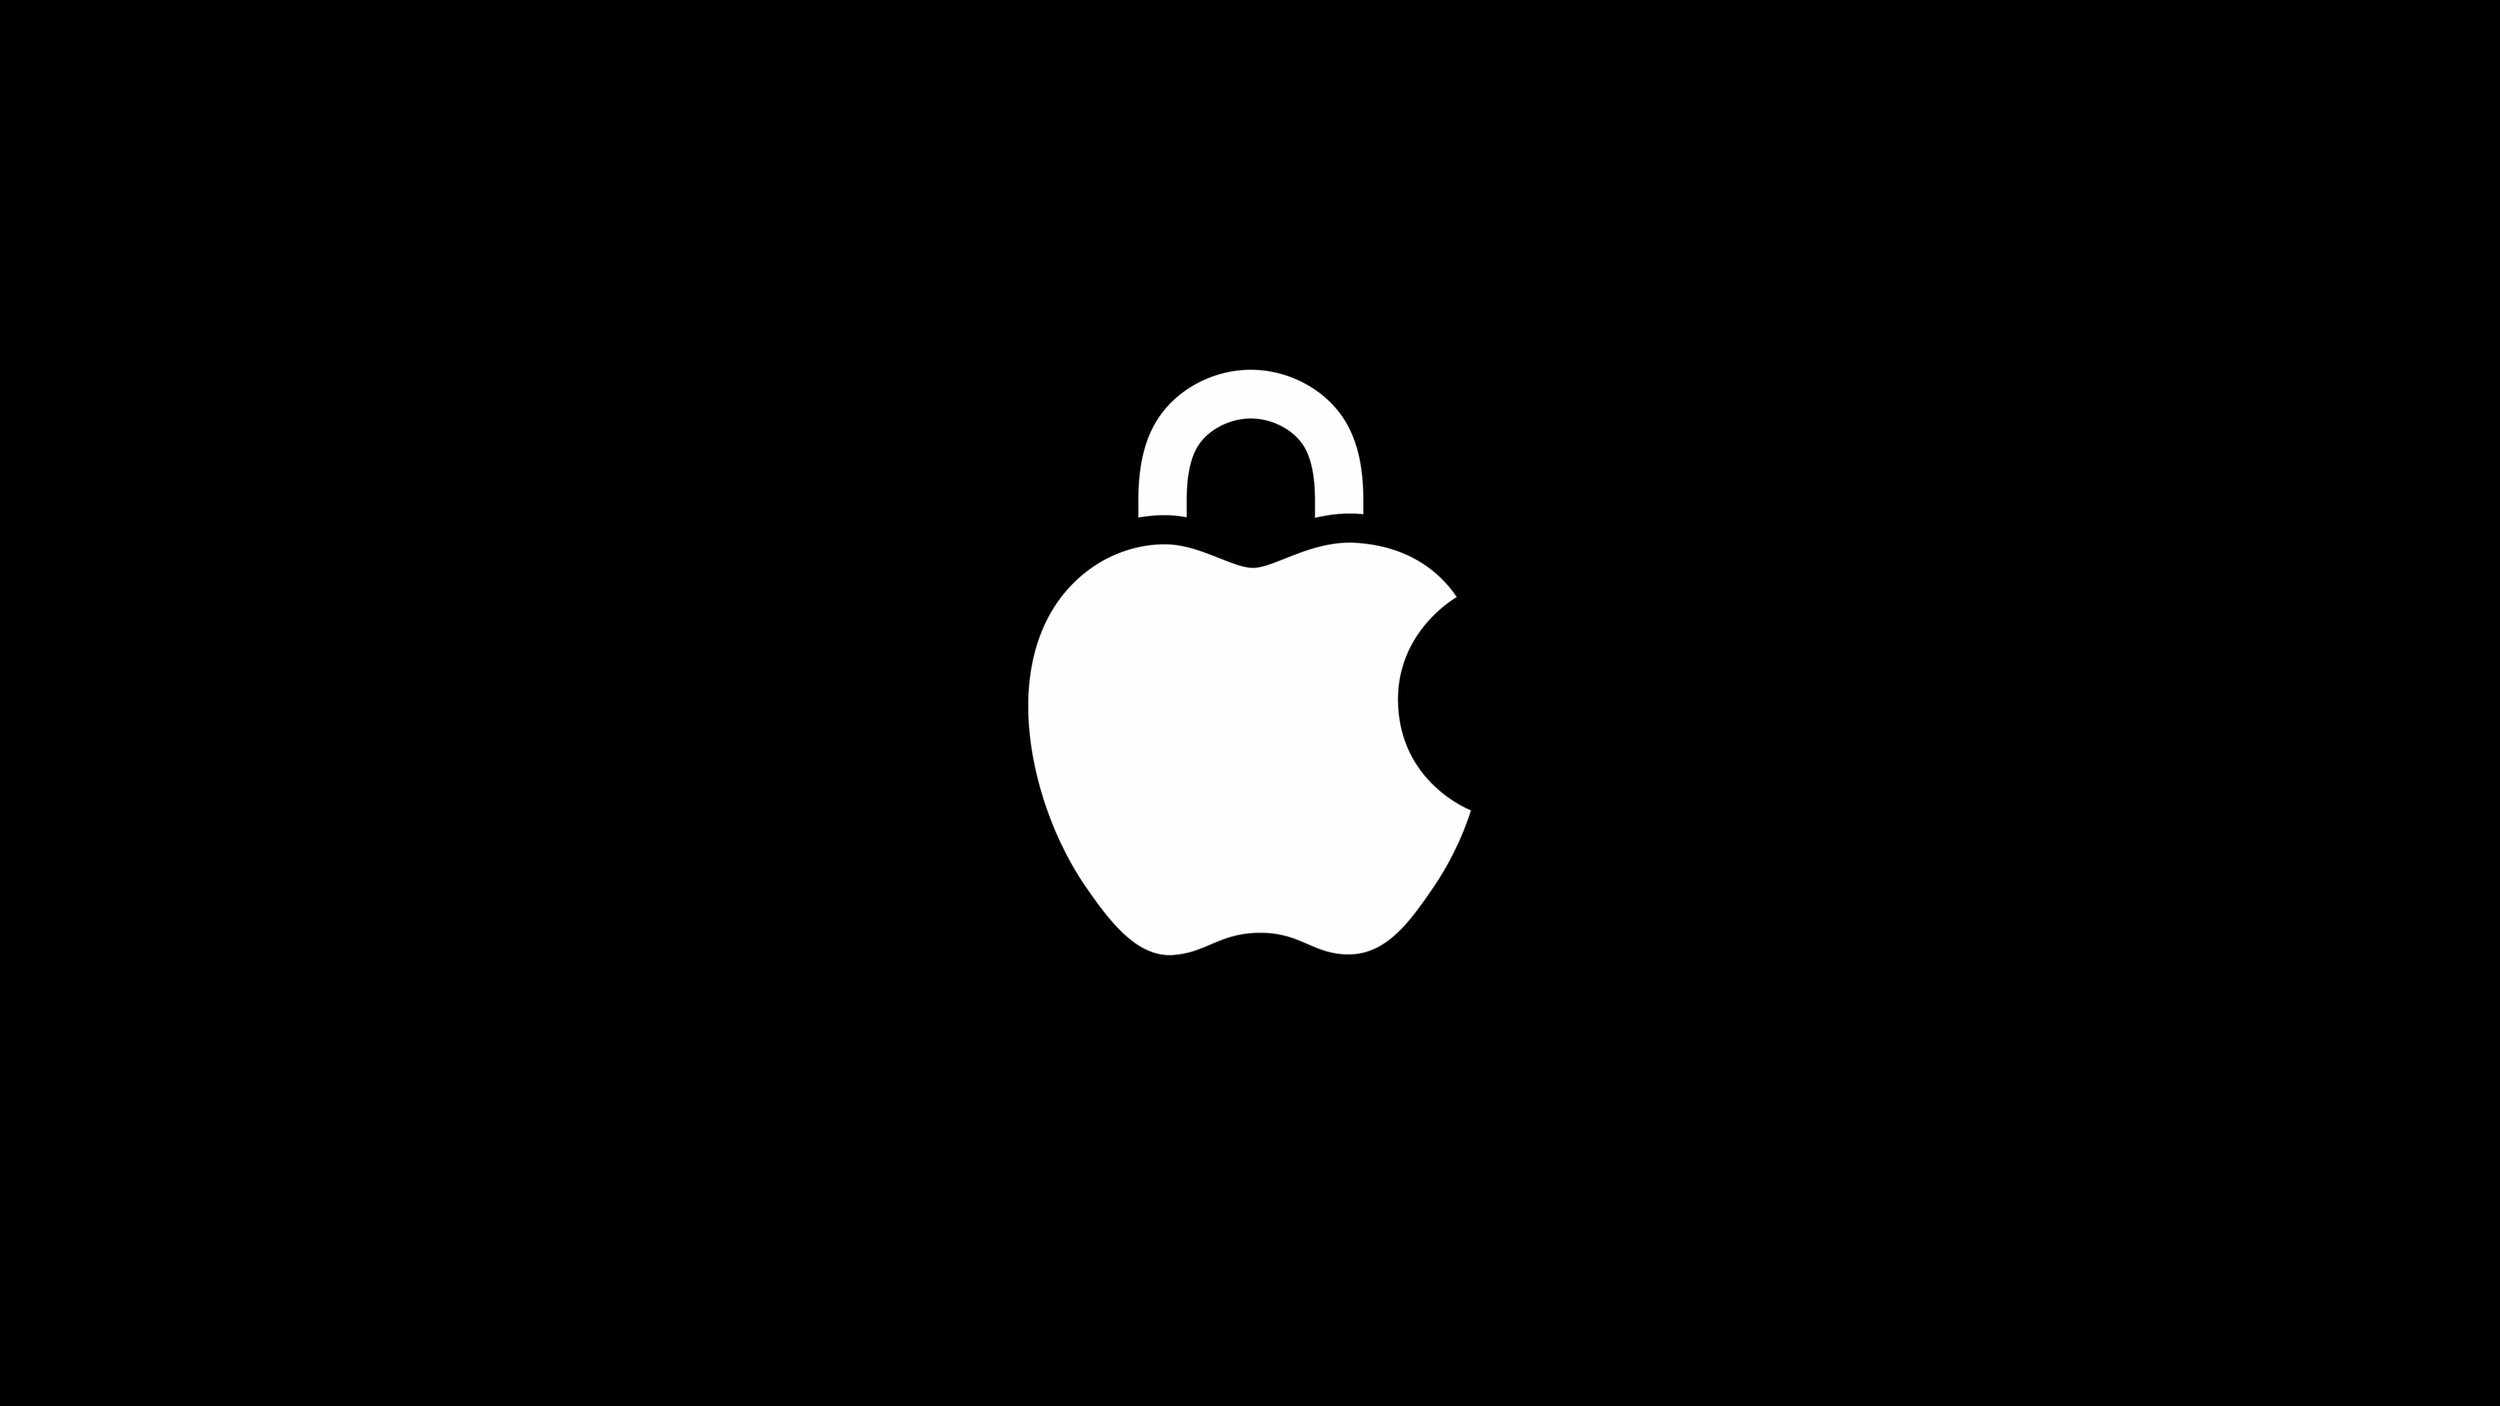 Apple-WWDC23-privacy-logo-230605.jpg